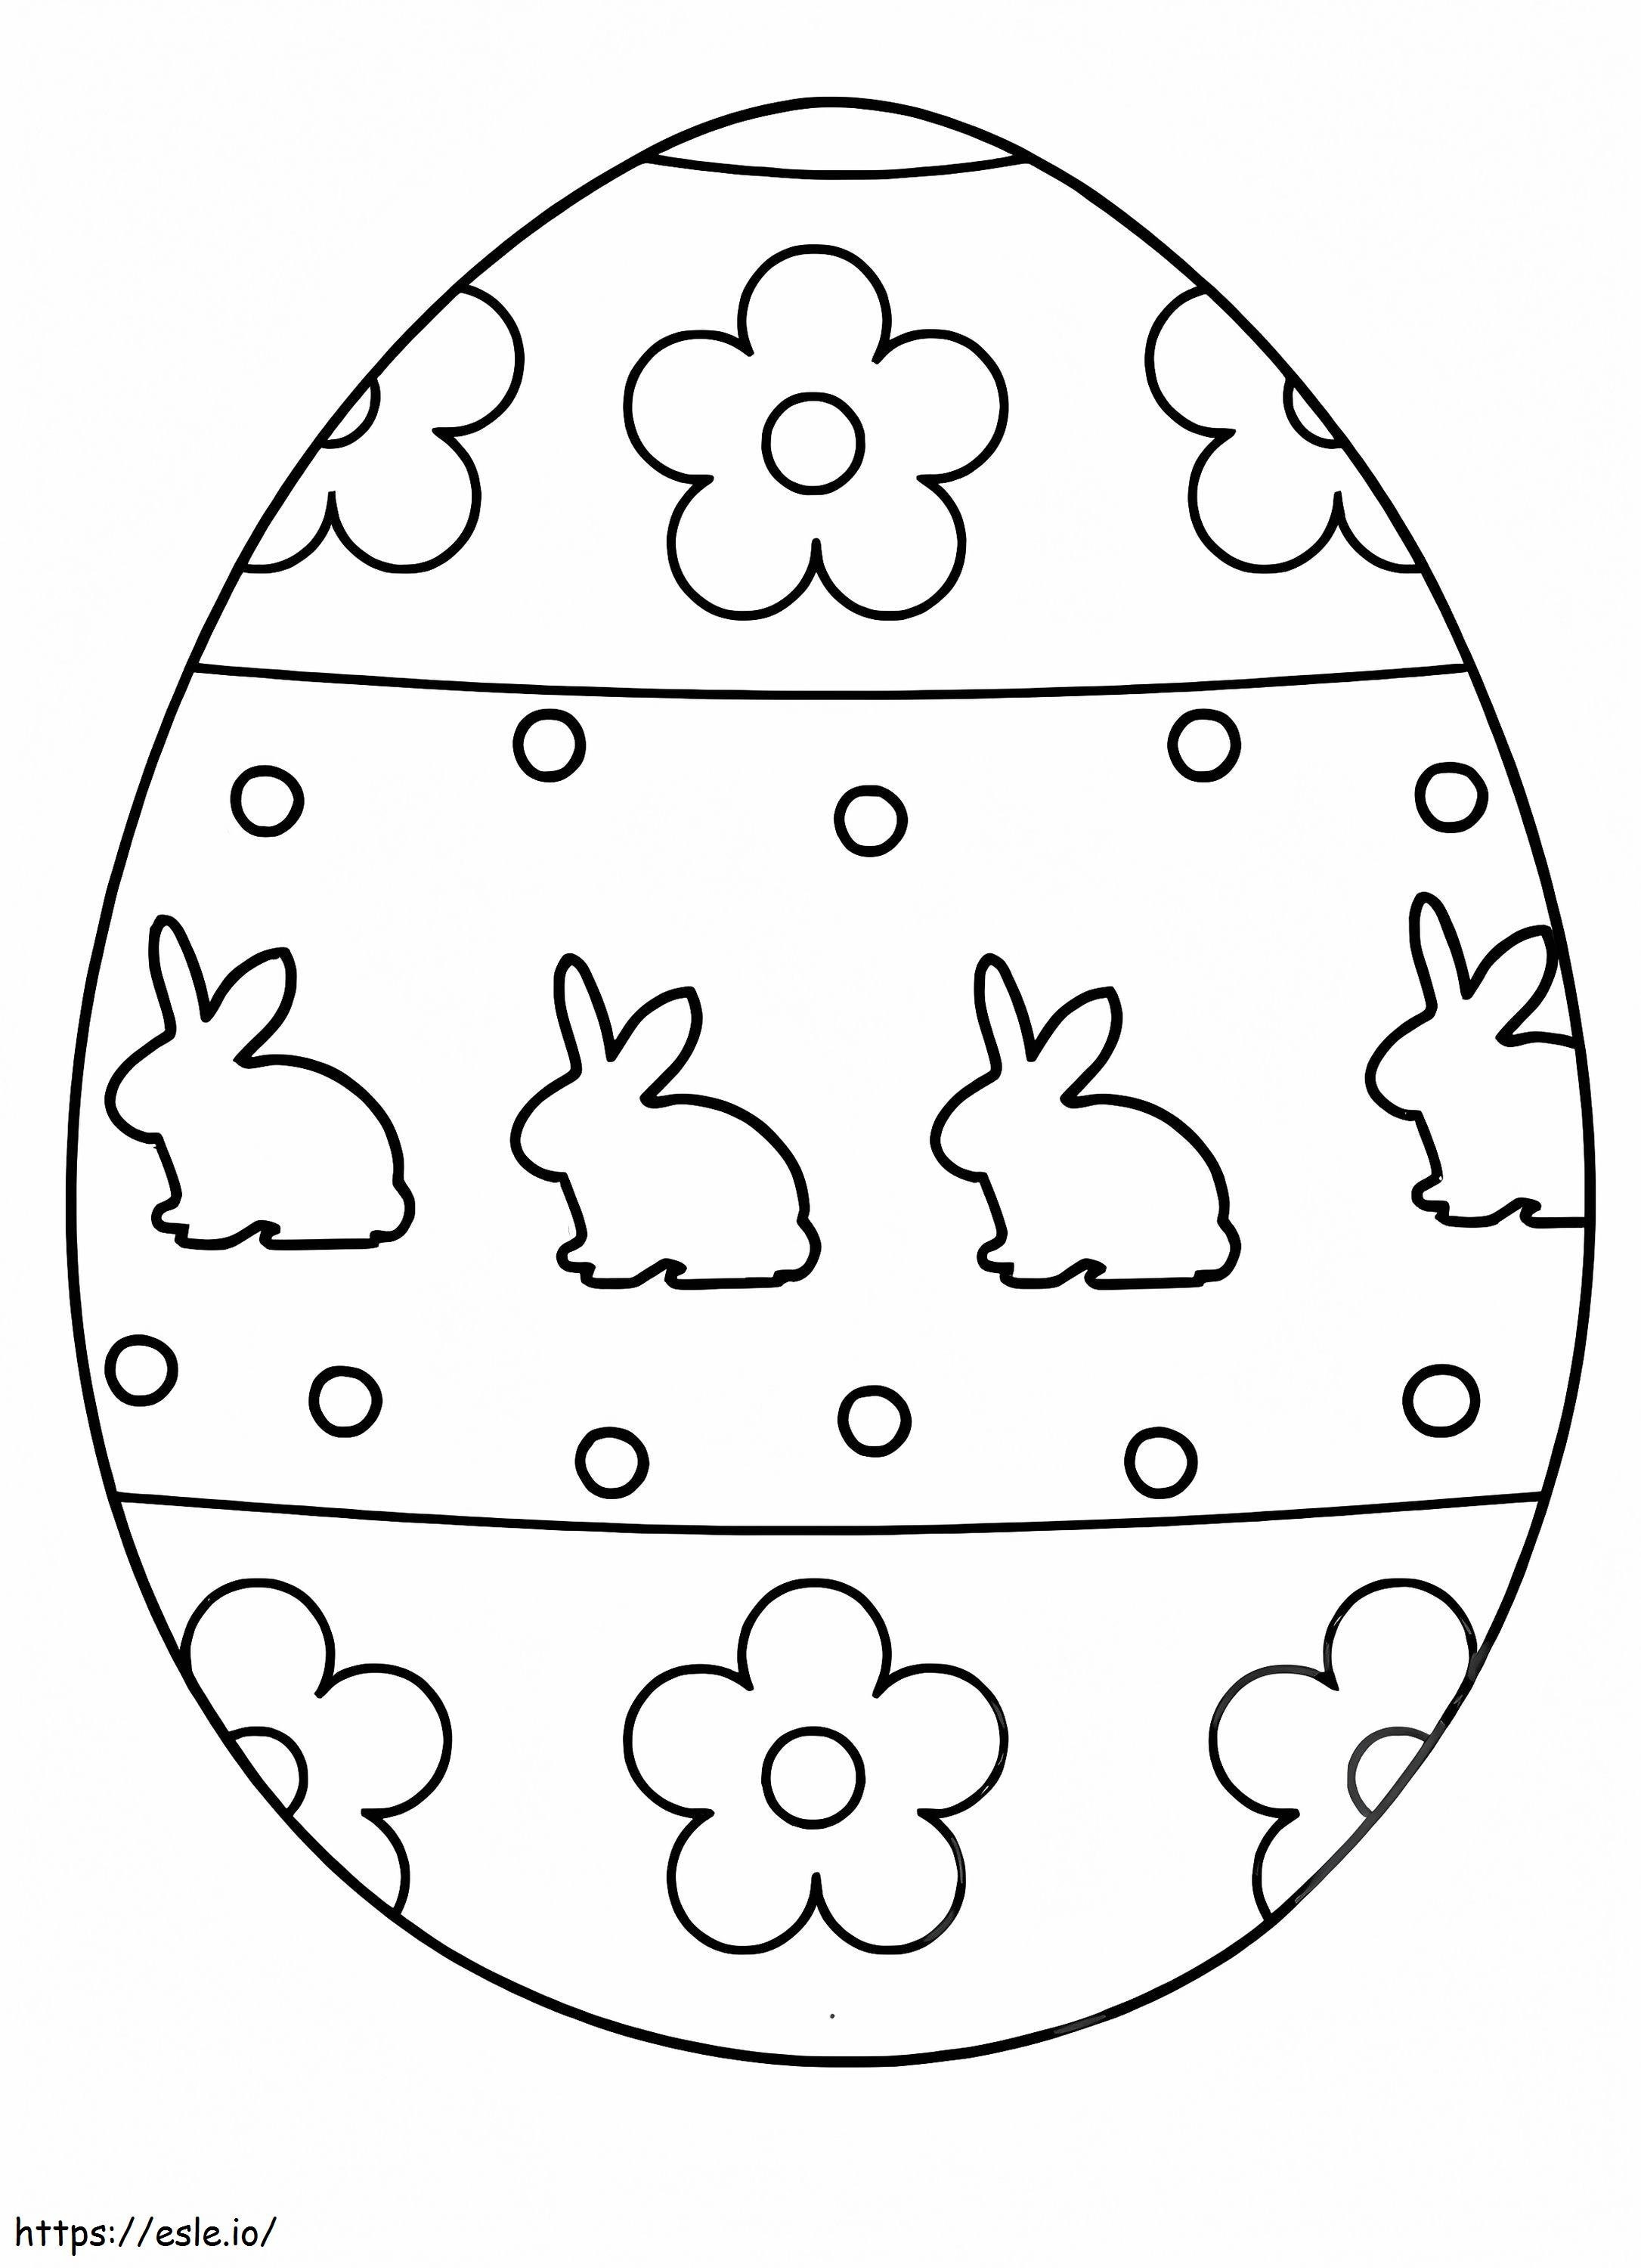 Coloriage Gros oeuf de Pâques à imprimer dessin